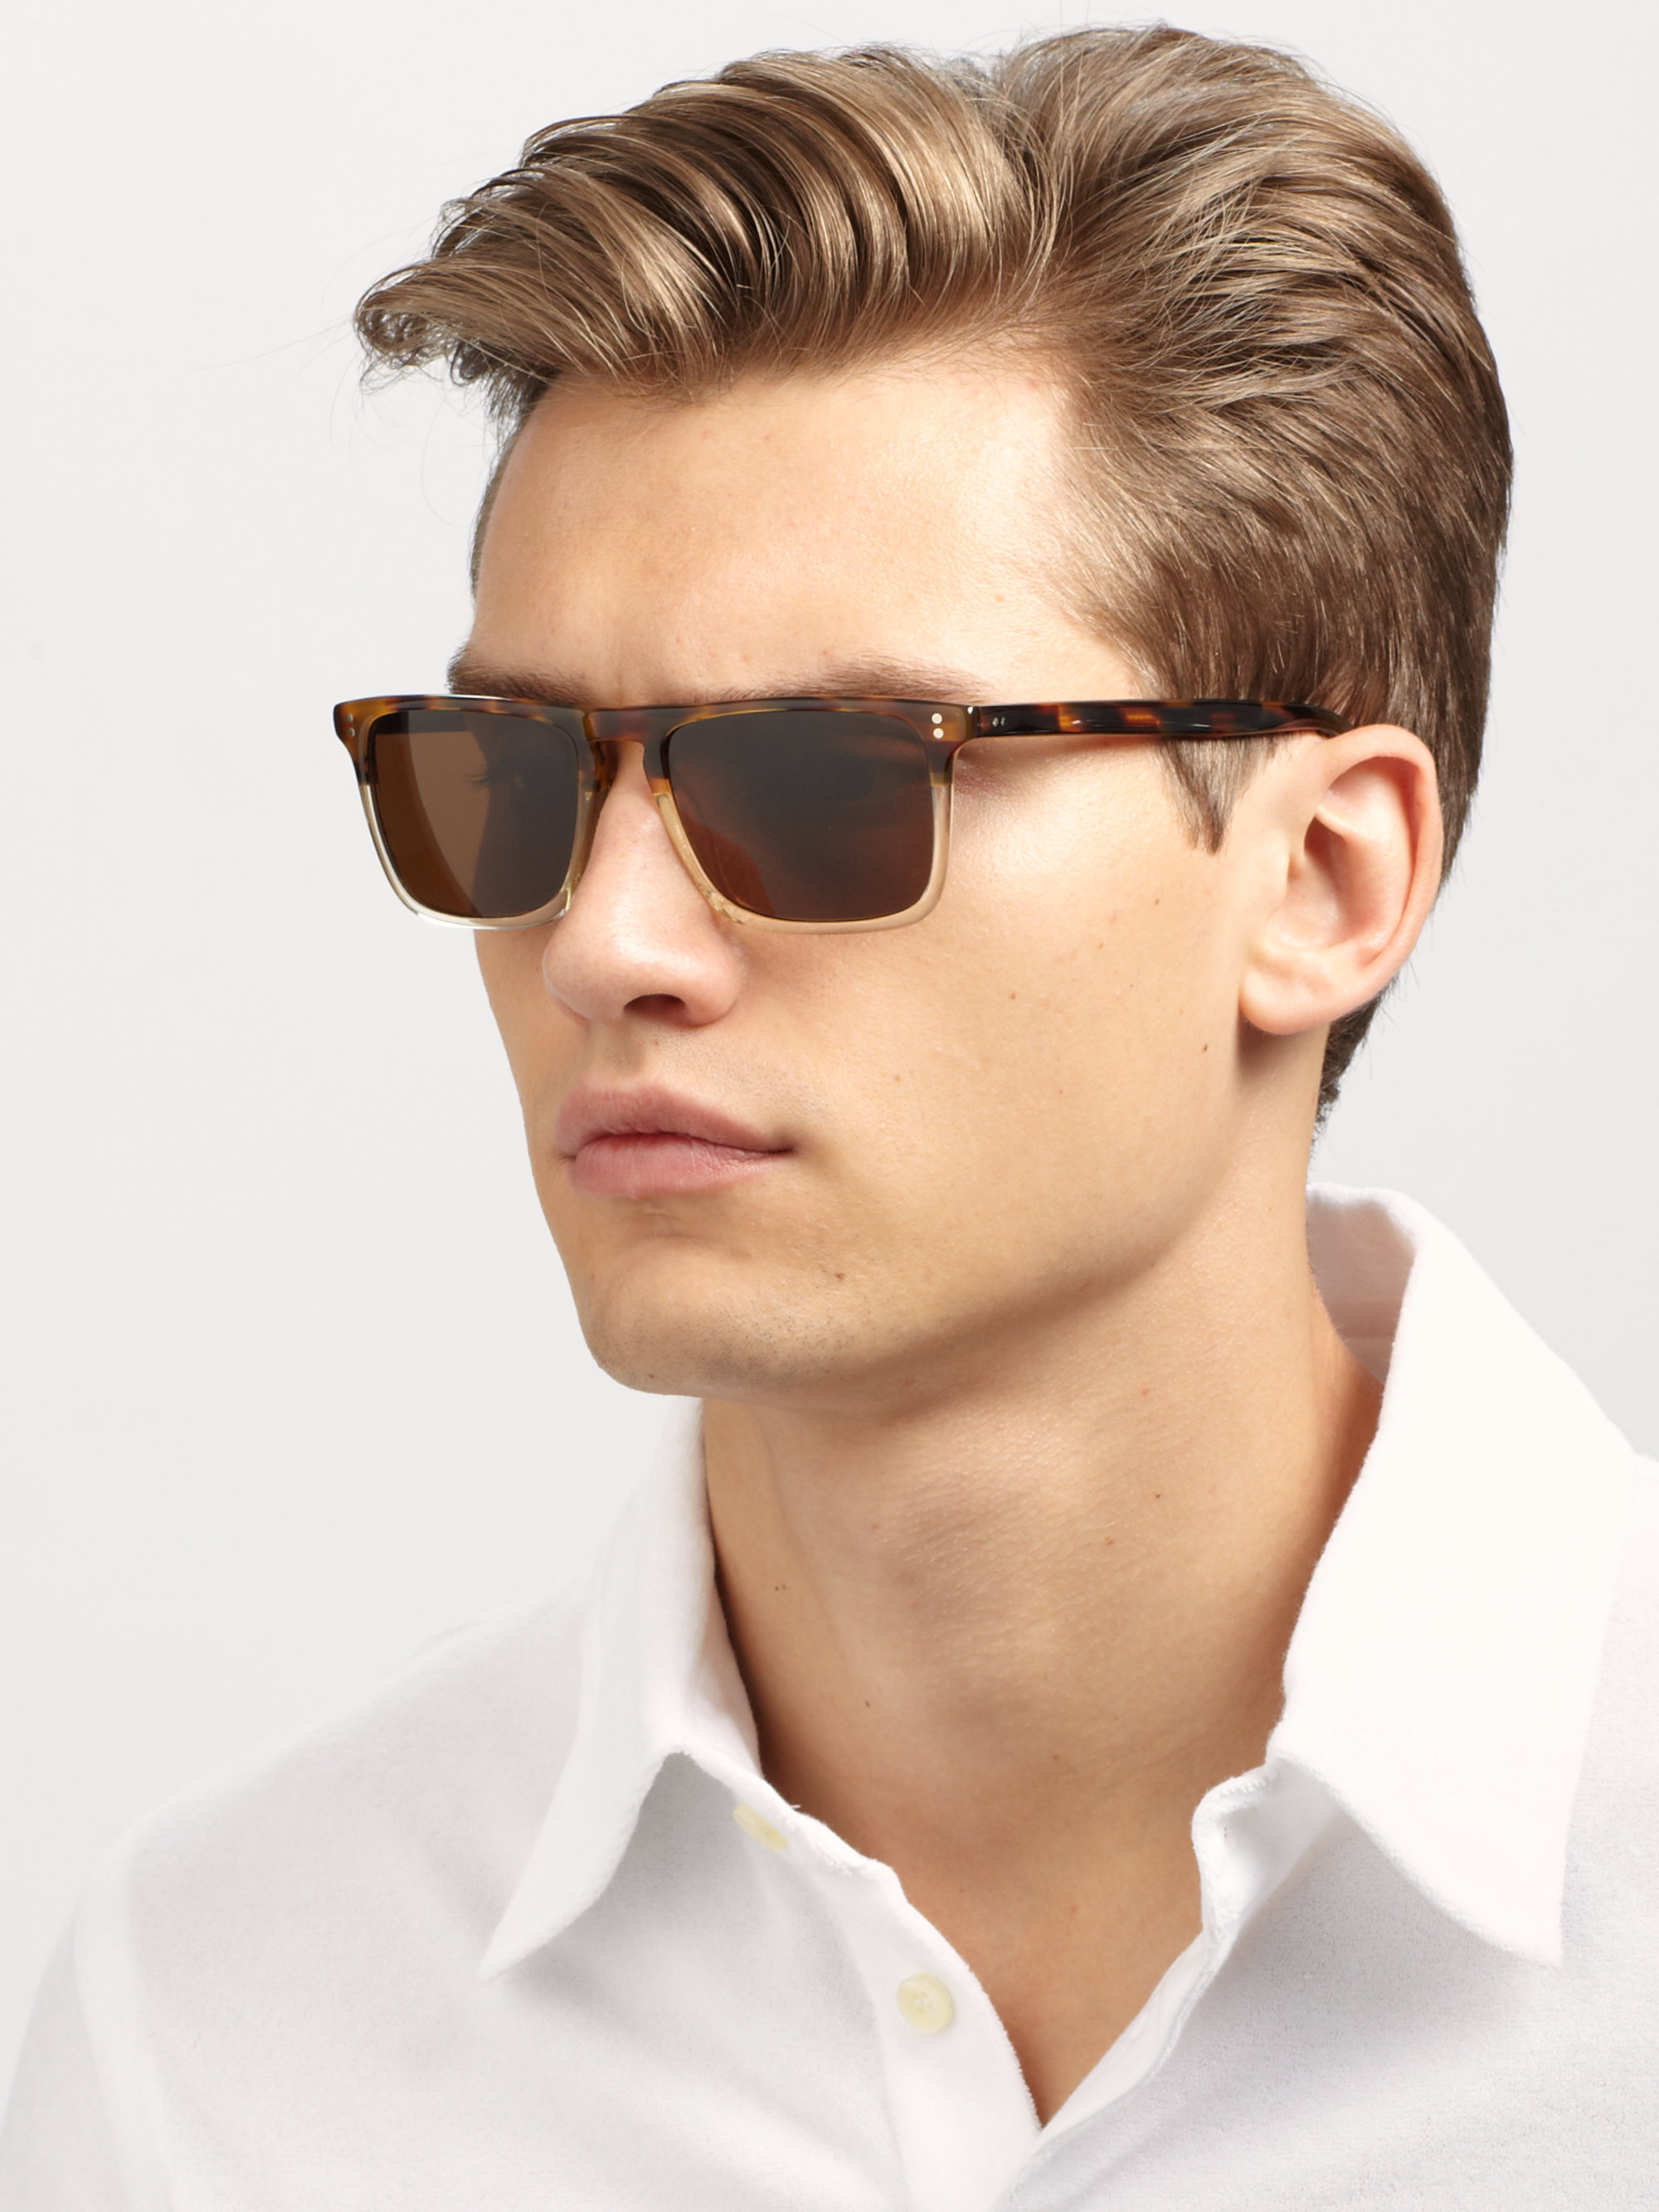 lyst-oliver-peoples-sanford-metal-sunglasses-in-metallic-for-men